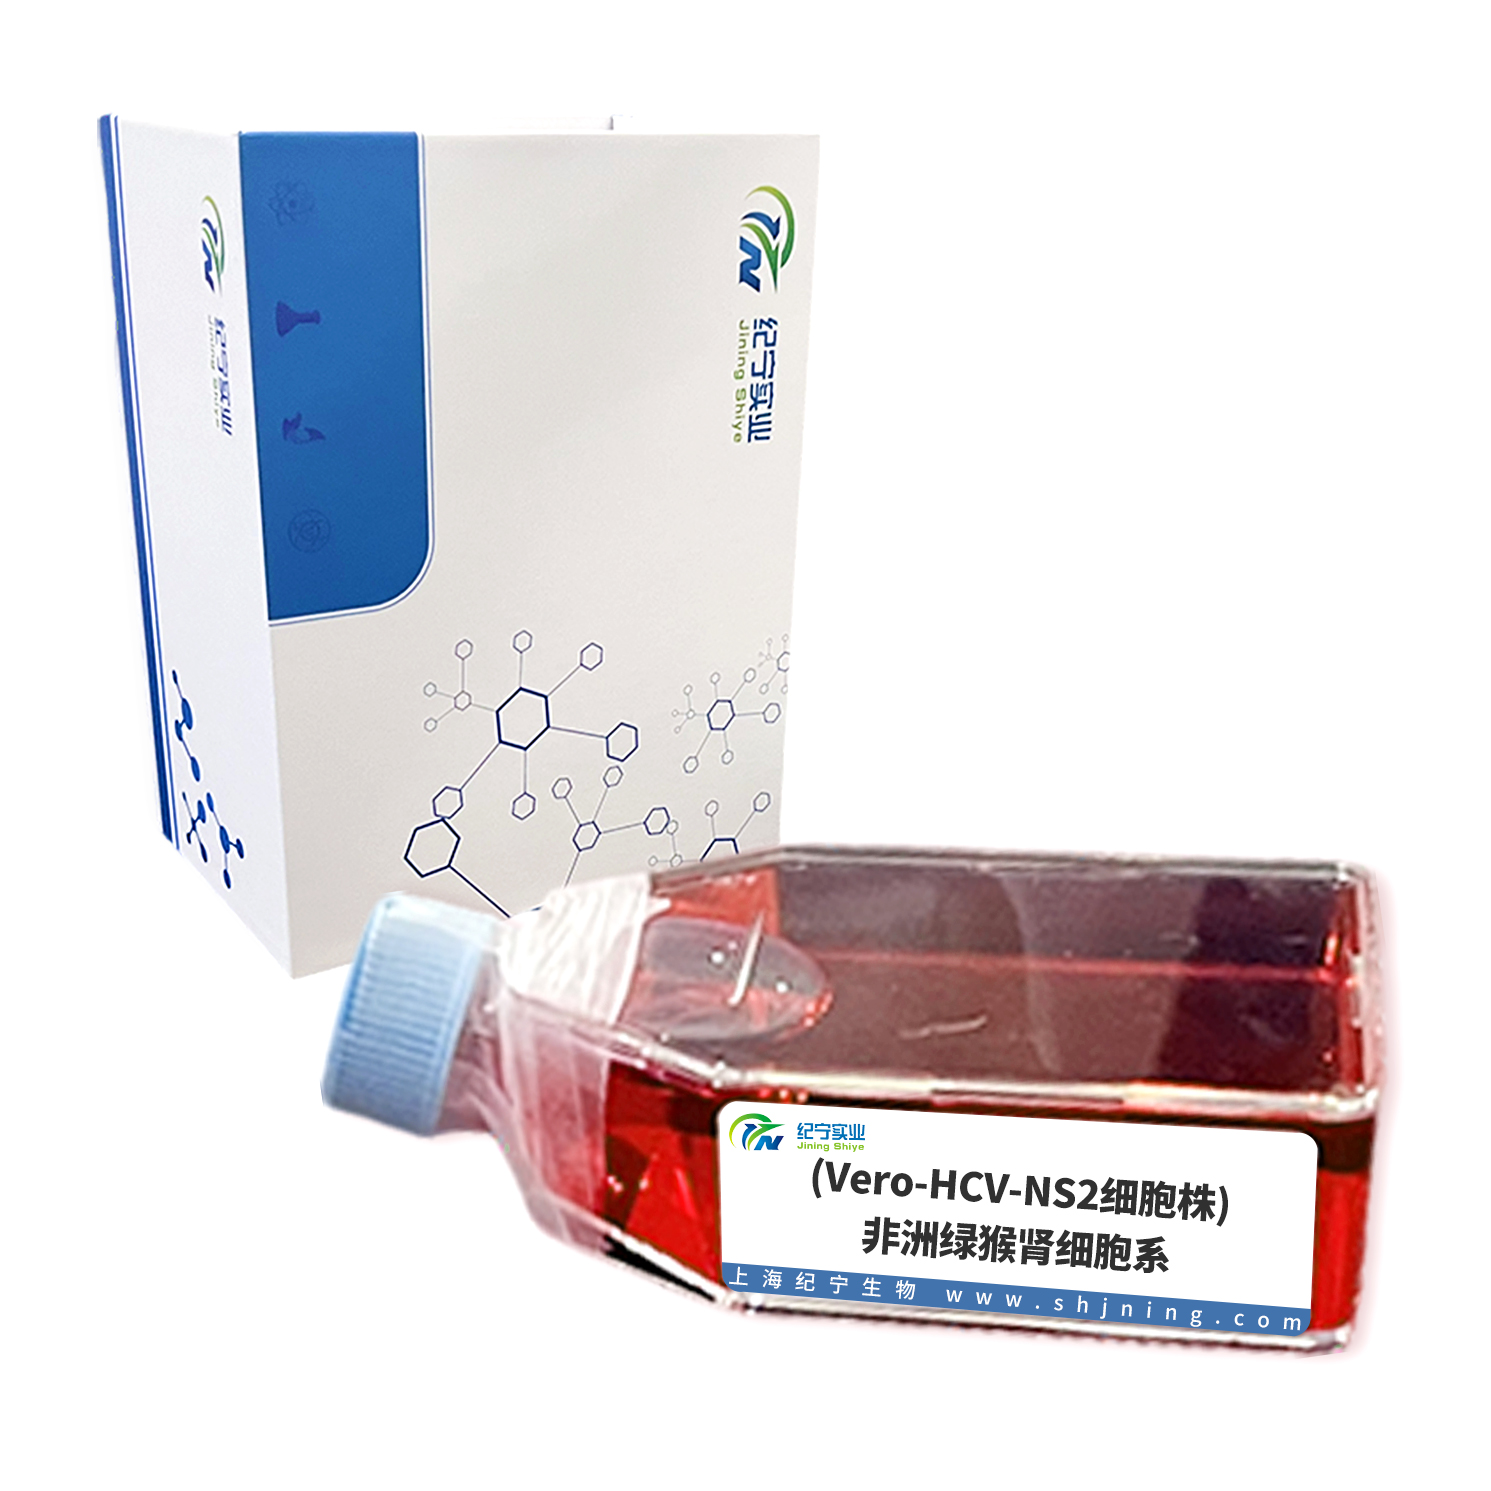 (Vero-HCV-NS2细胞株)非洲绿猴肾细胞系